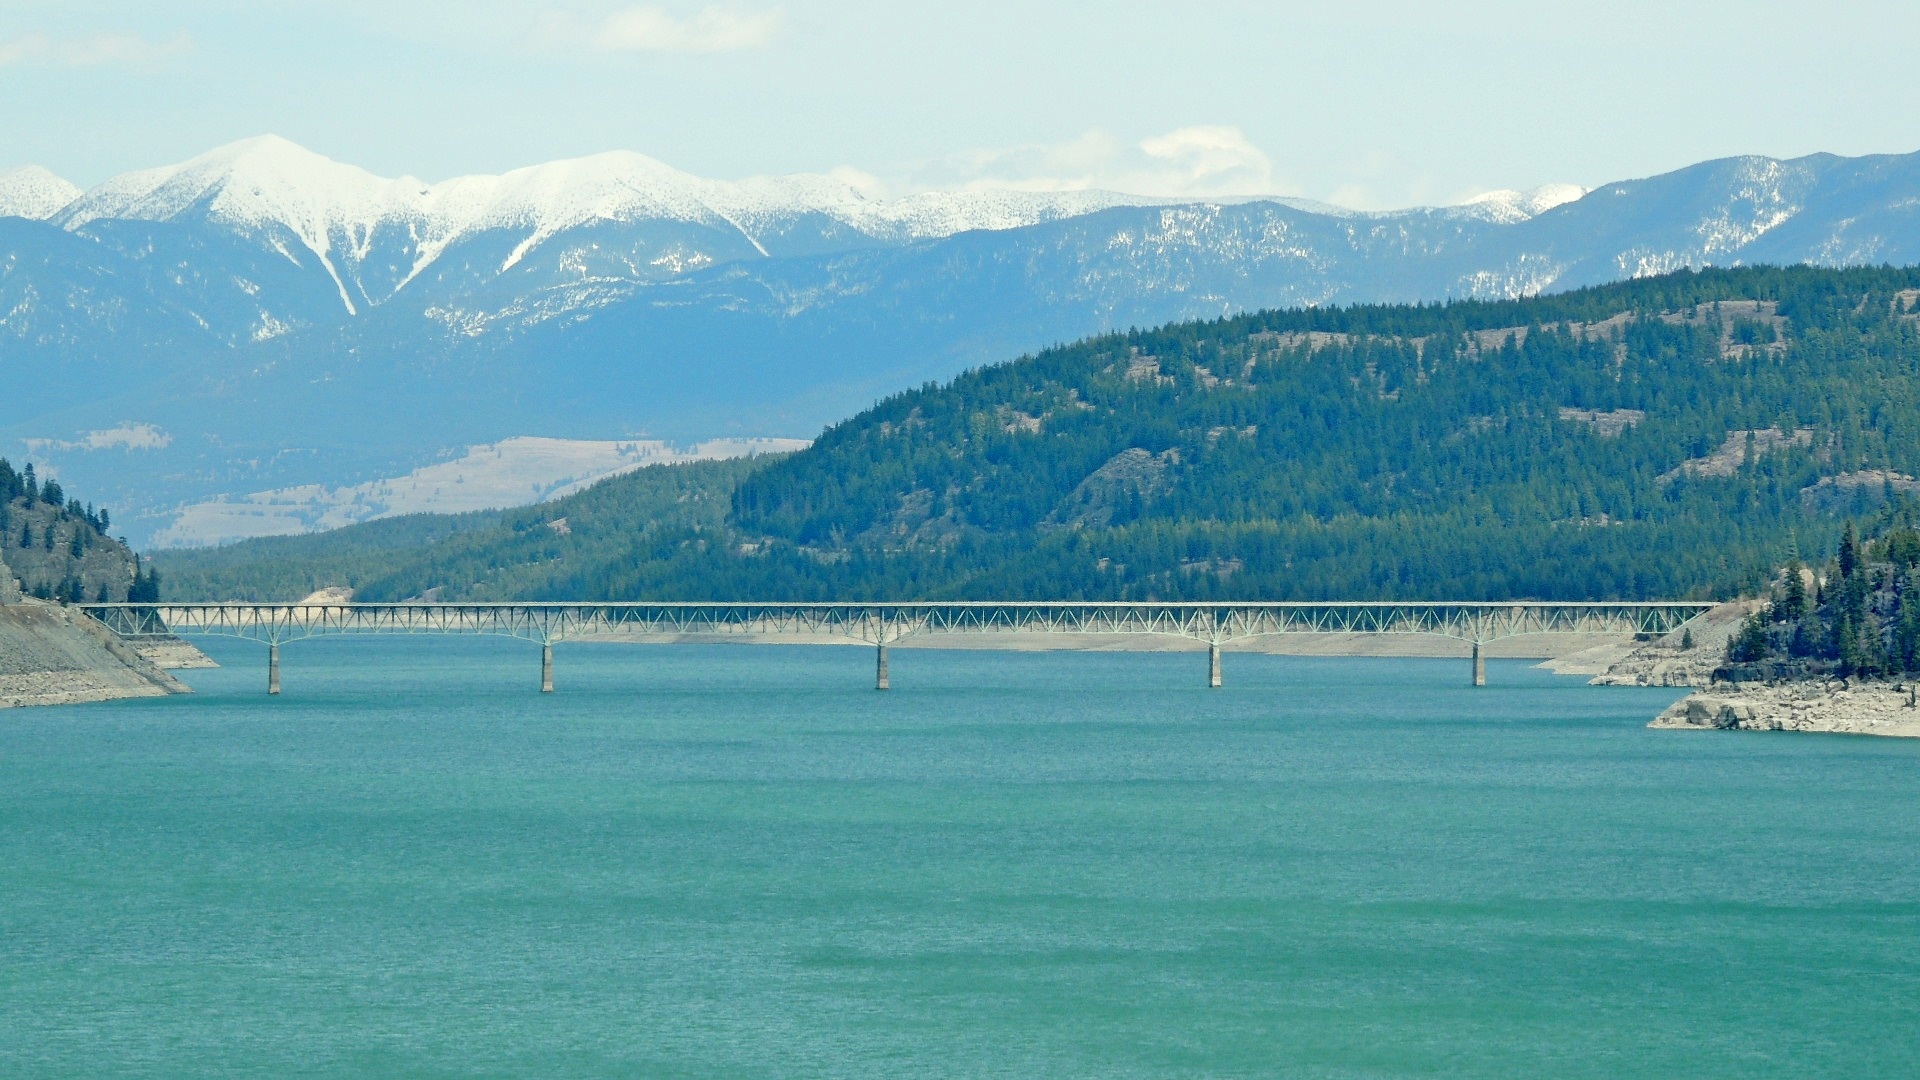 Lake Koocanusa, Bridge in Eureka, Montana, Truss bridges, 1920x1080 Full HD Desktop